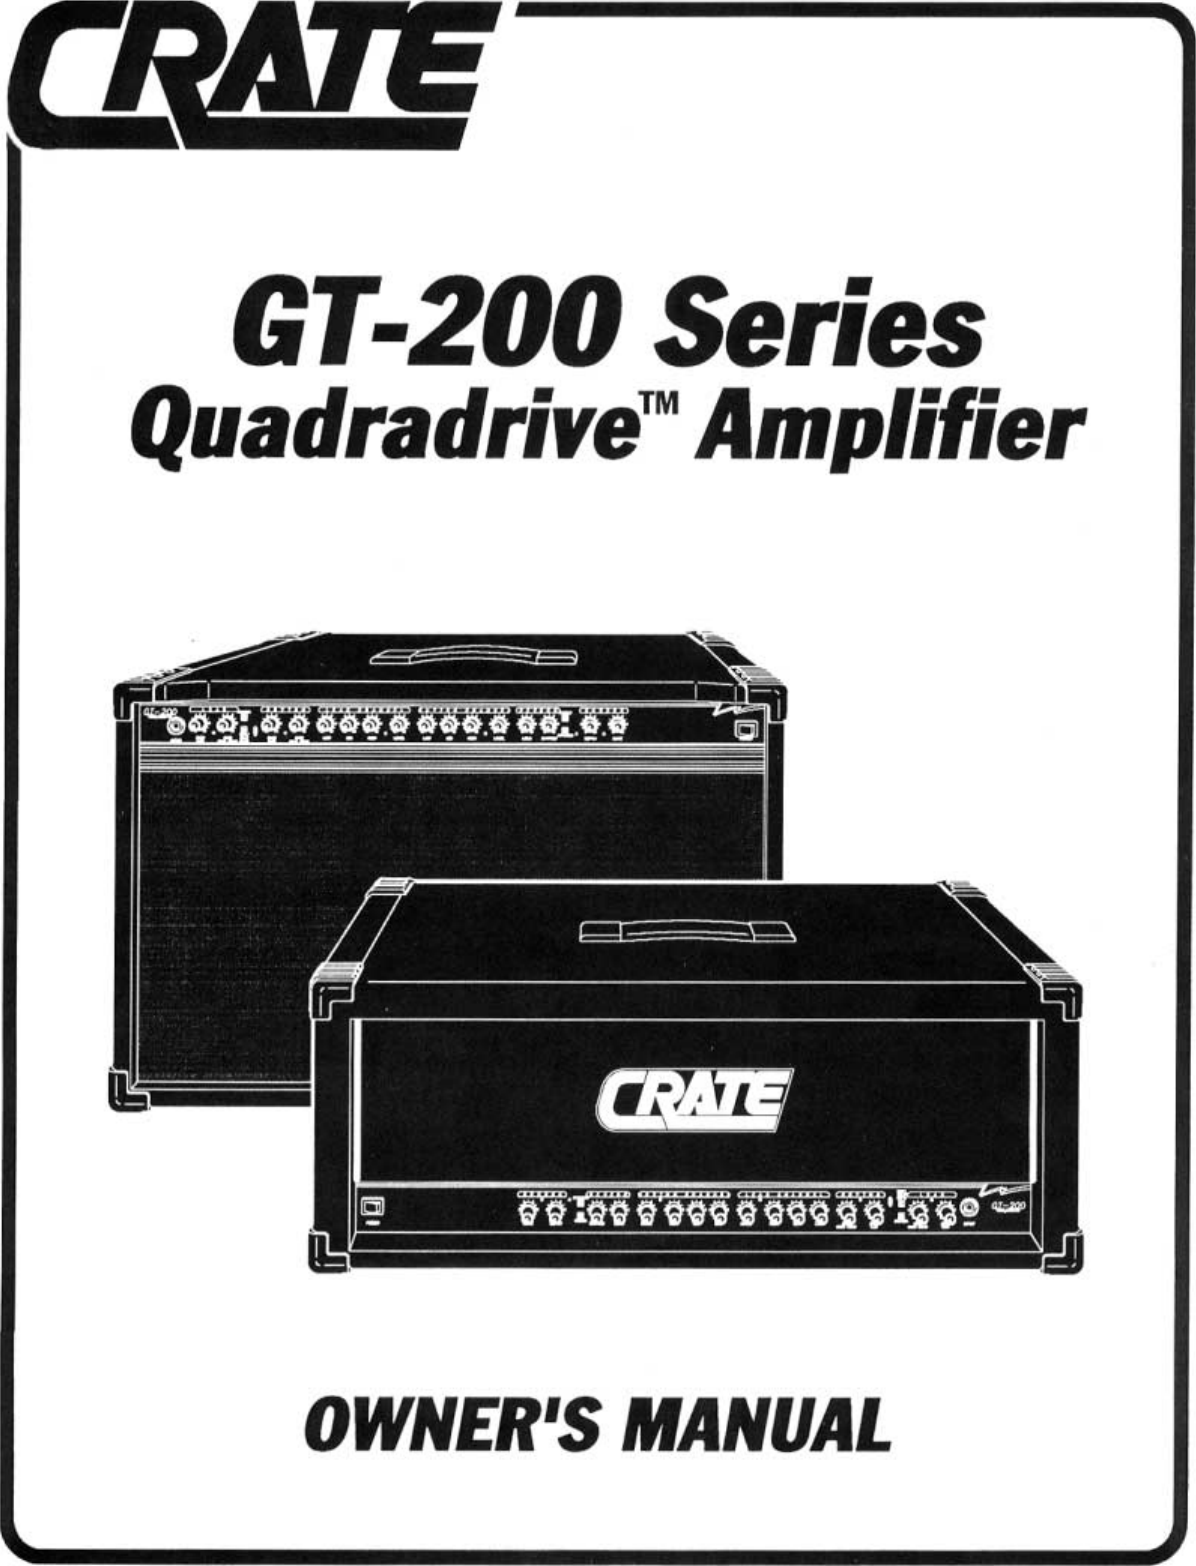 crate amplifiers wikipedia